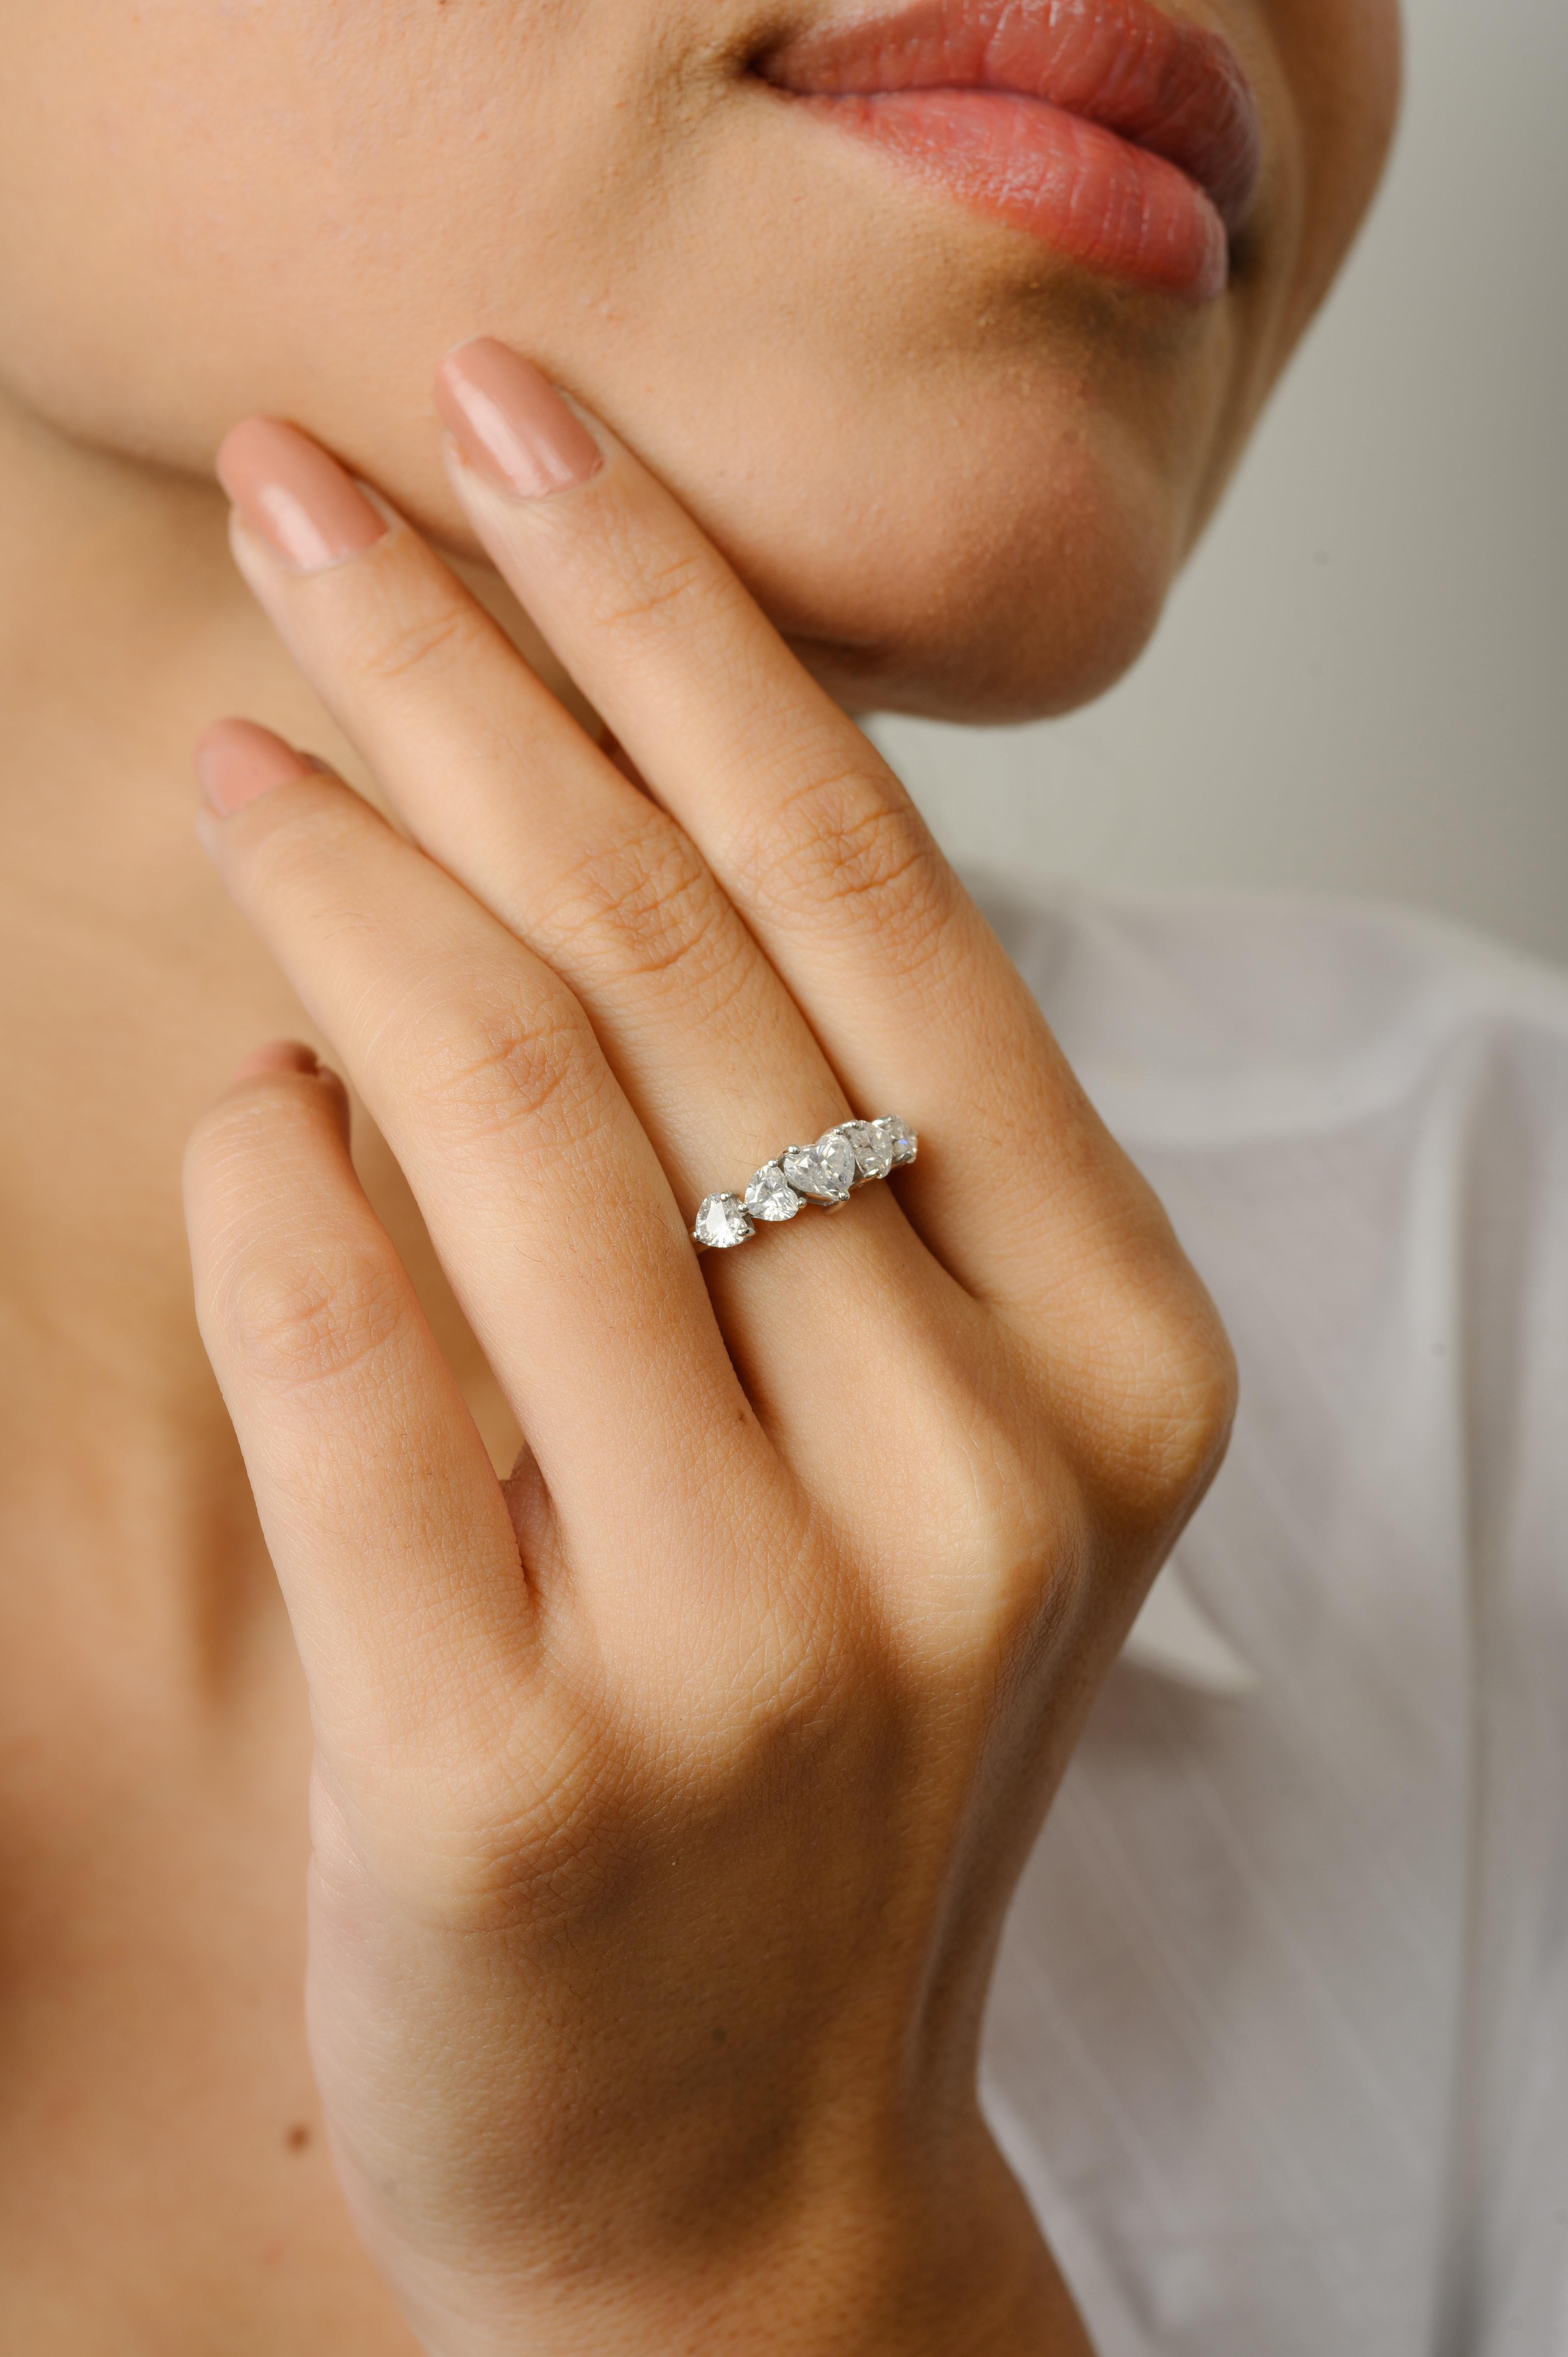 En vente :  Bague de fiançailles à cinq diamants en or blanc massif 18 carats 4